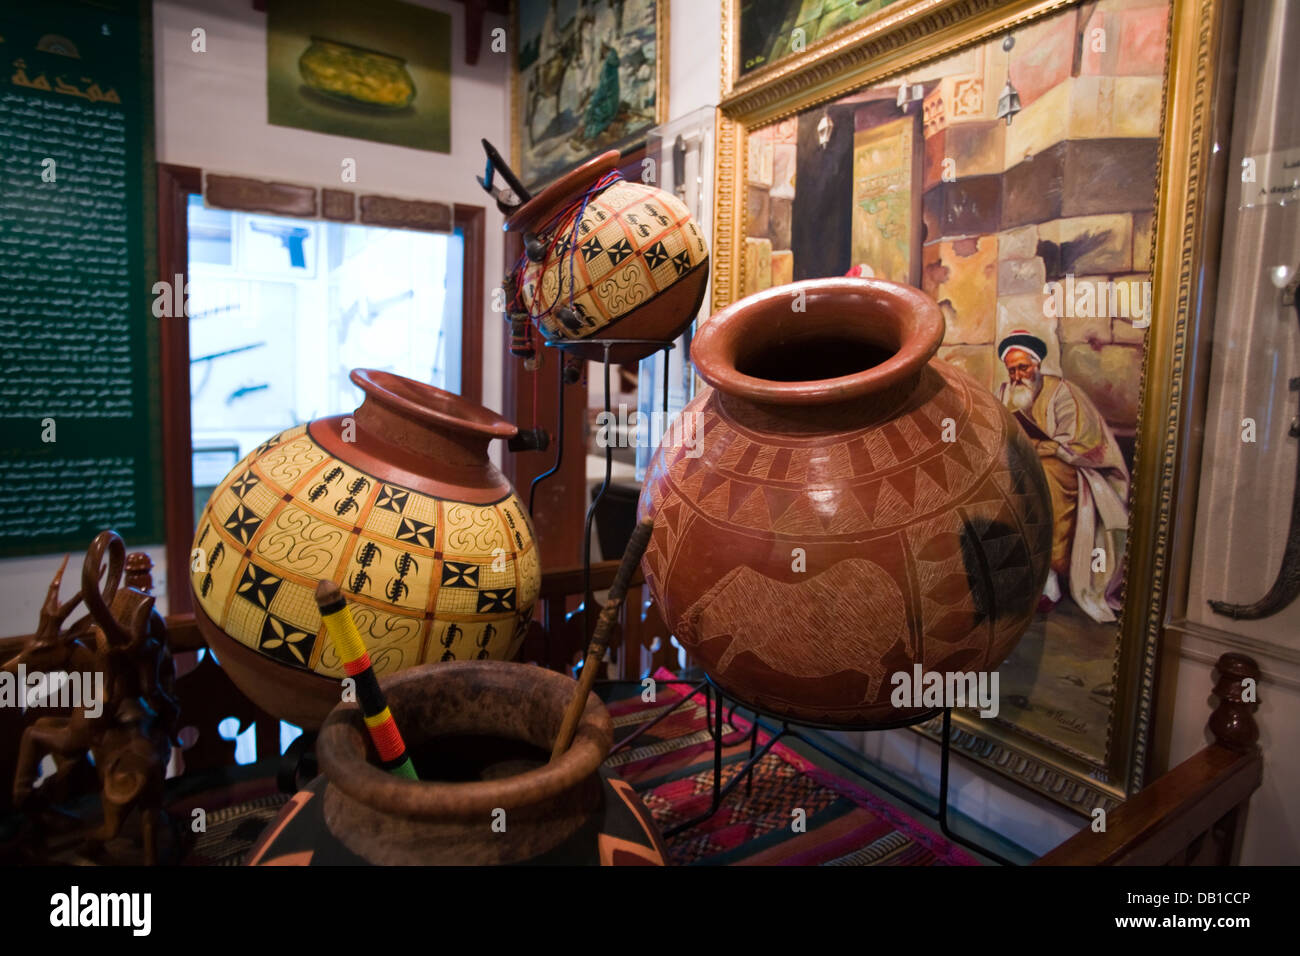 Exhibits, the Al-Tayibat City Museum of International Civilisation, Jeddah, Saudi Arabia. Stock Photo